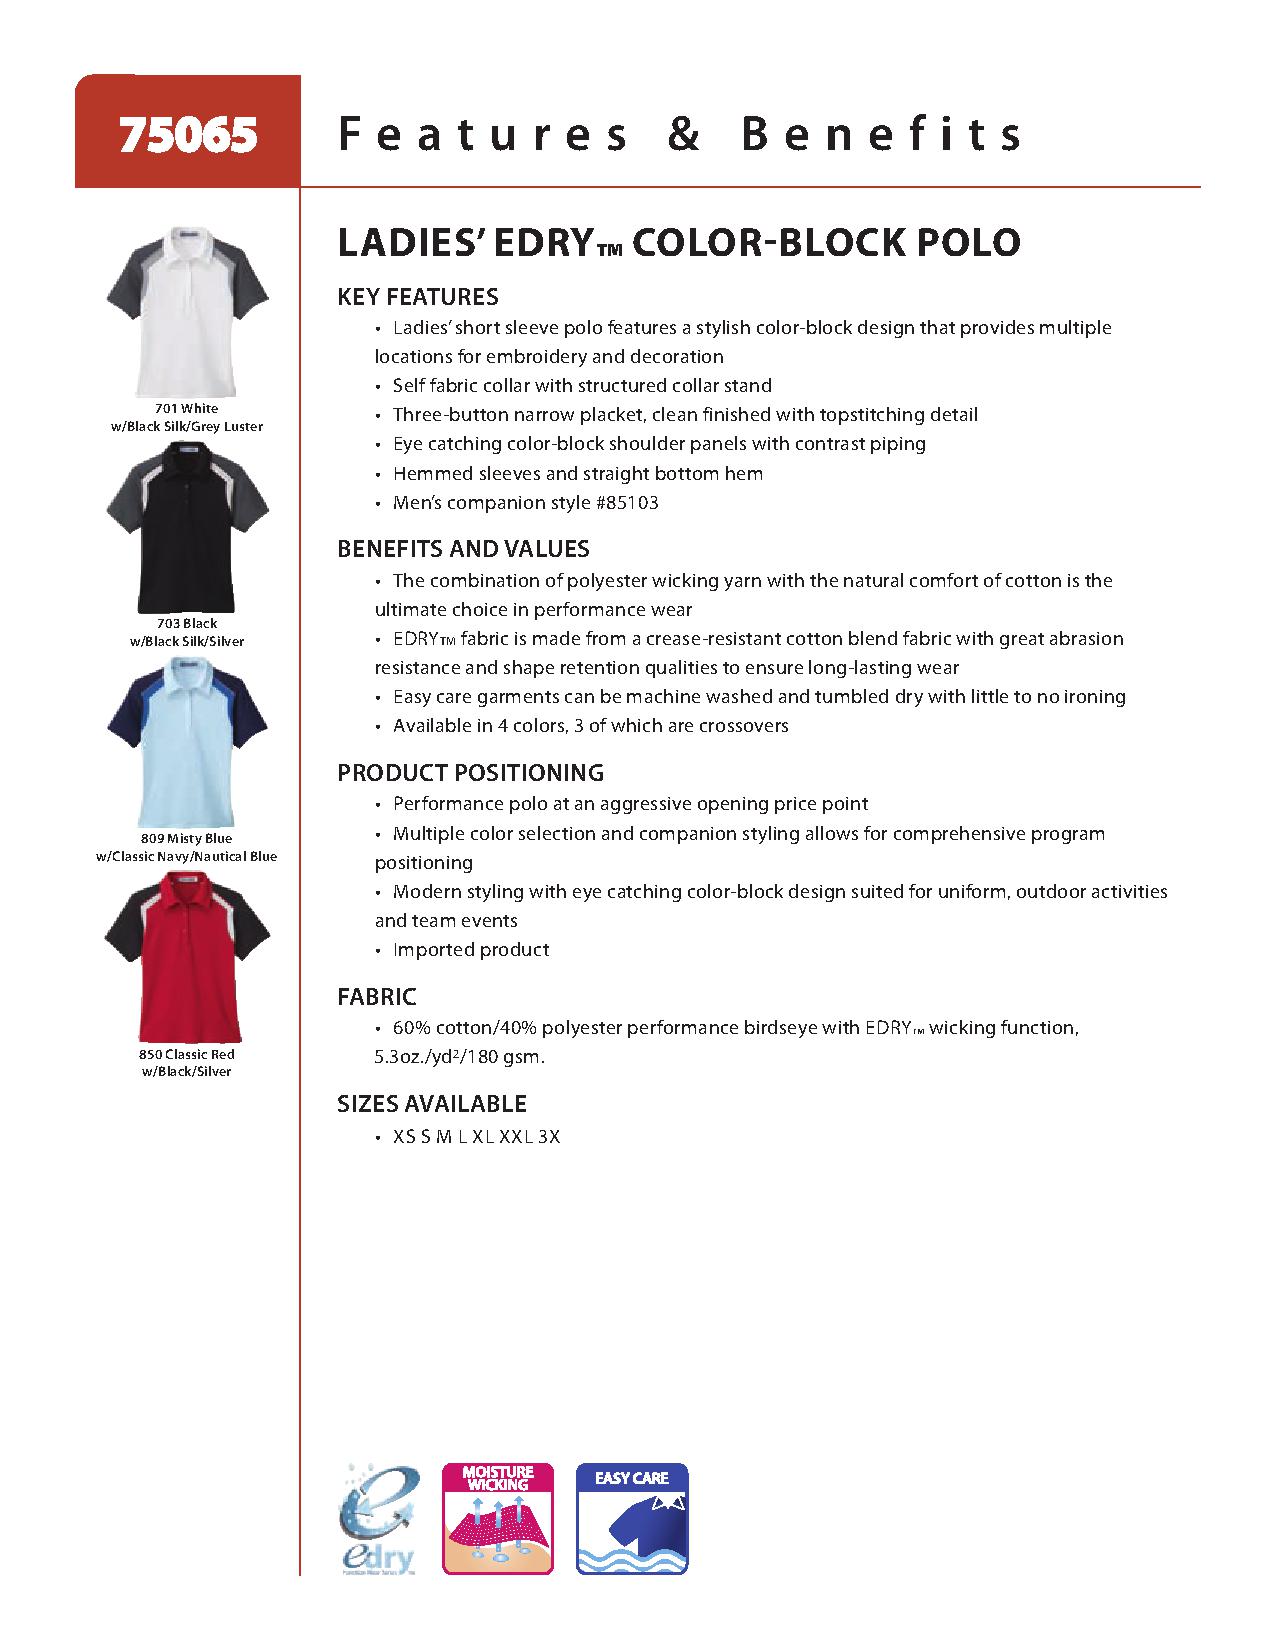 Ash City Jersey 75065 - Ladies' Edry Color-Block Polo